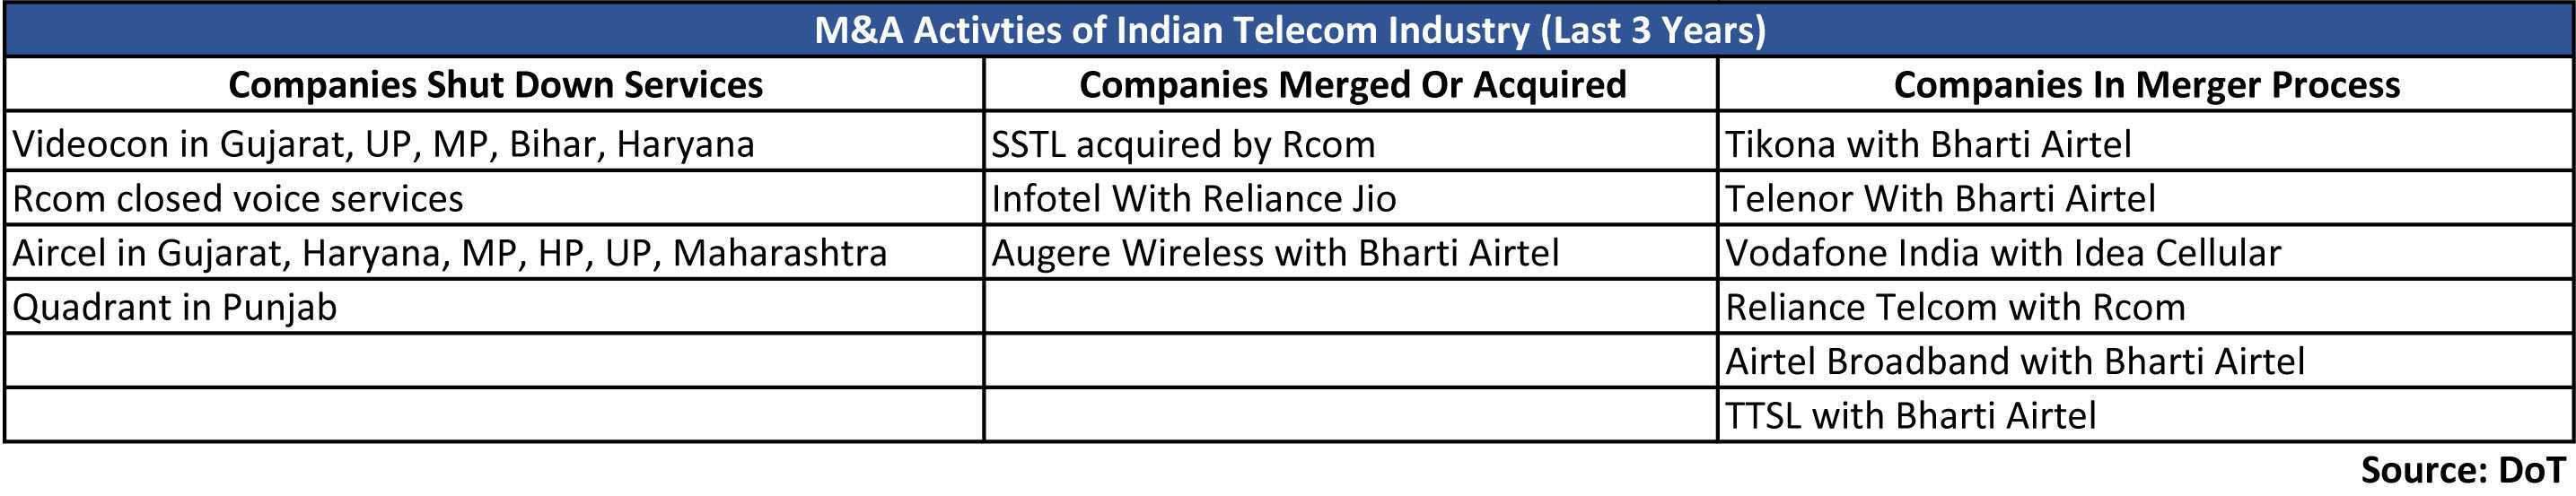 Activties of Indian Telecom Industry (last 3 Years)